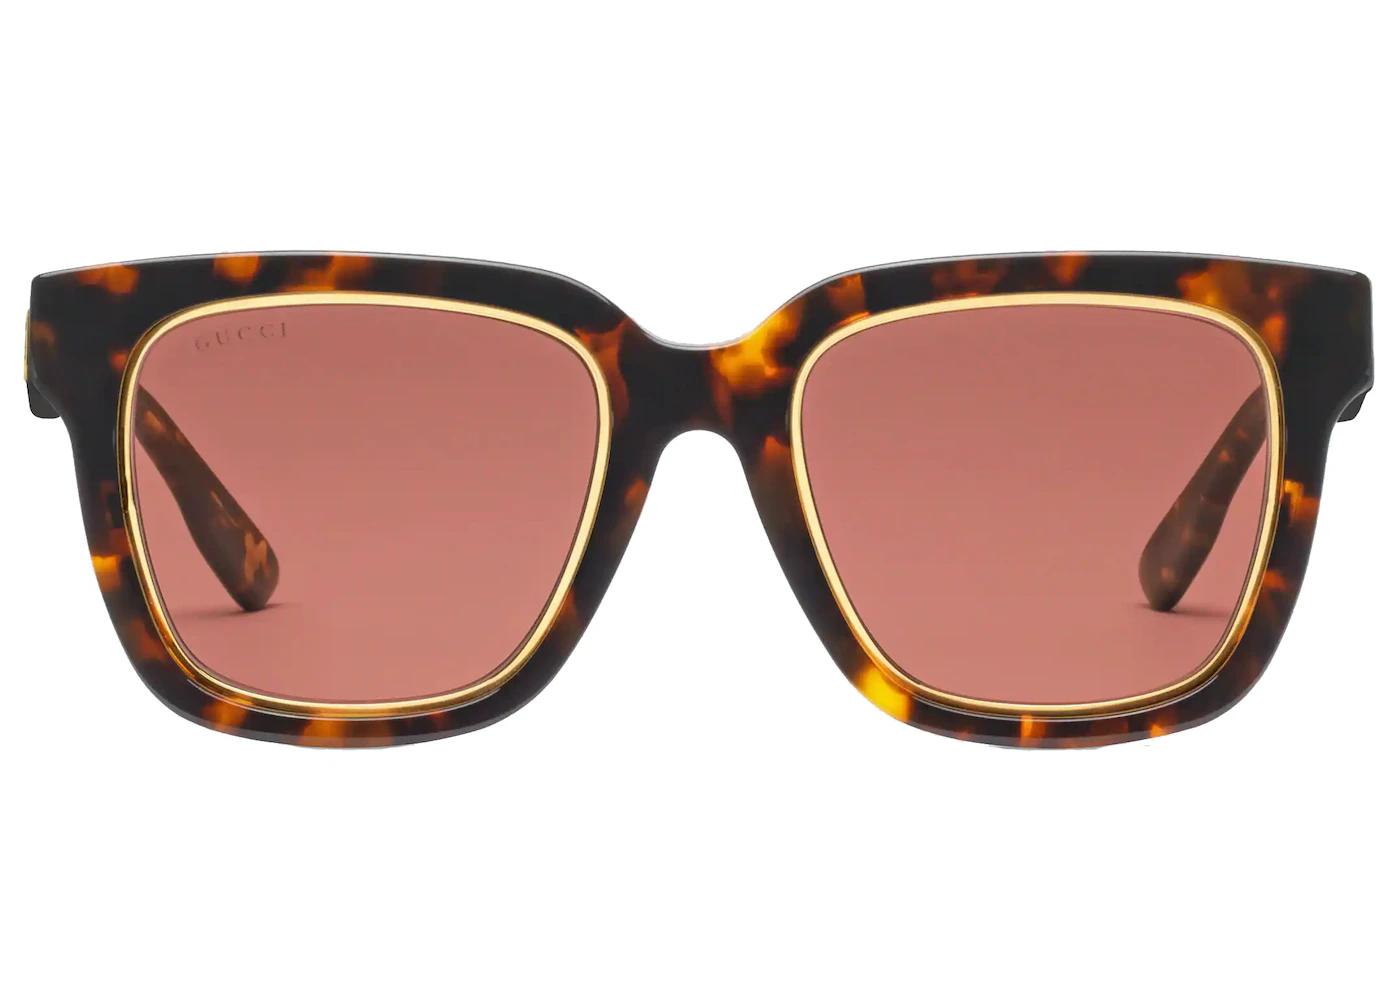 Gucci Low Nose Bridge Fit Square Sunglasses Tortoiseshell in Acetate - GB